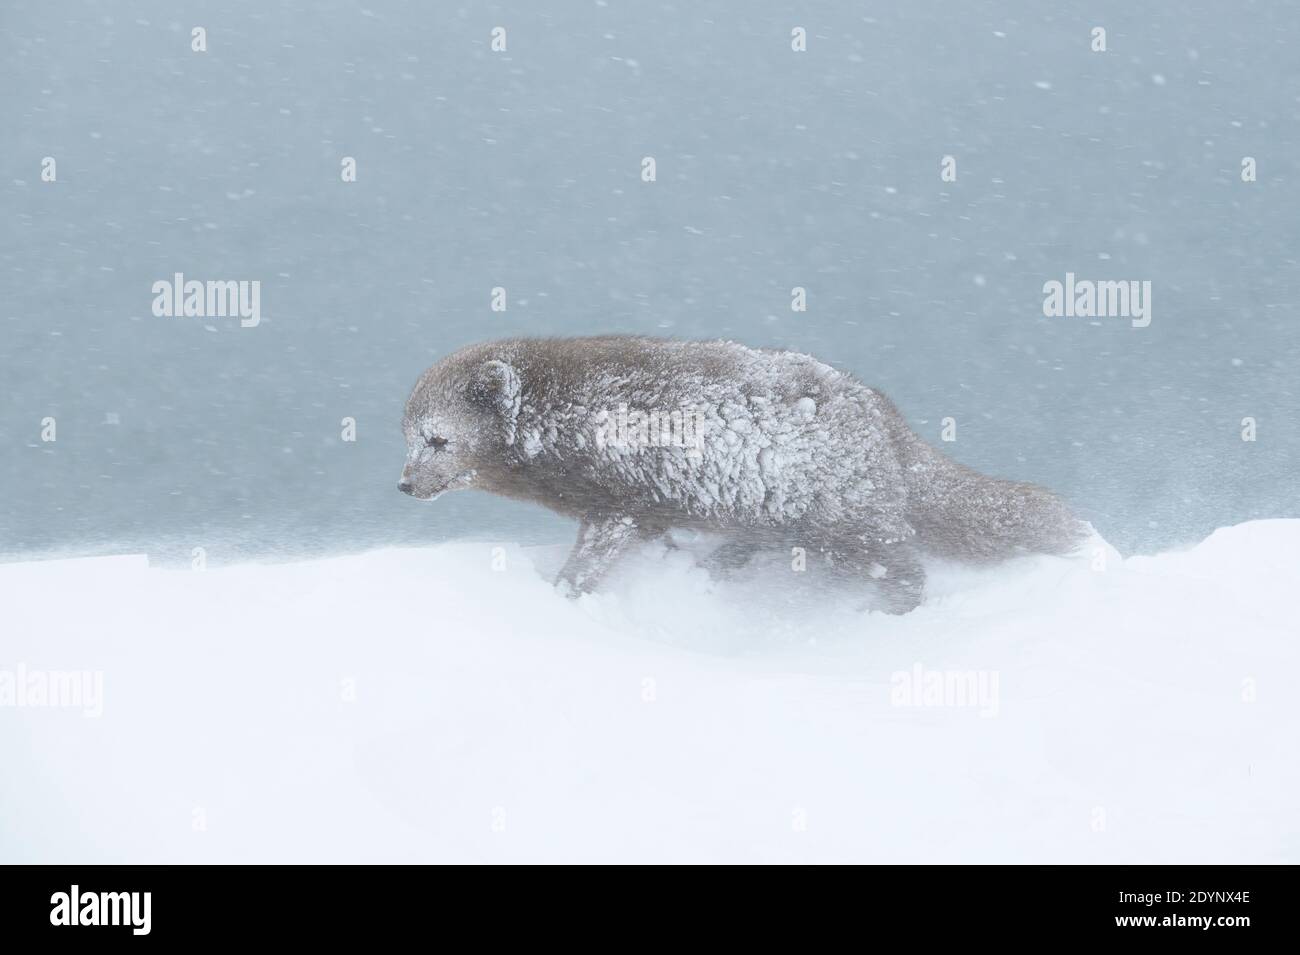 Arctic fox (Vulpes lagopus). Hornstrandir, Iceland. Blue colour morph in winter coat. February 2020 Stock Photo